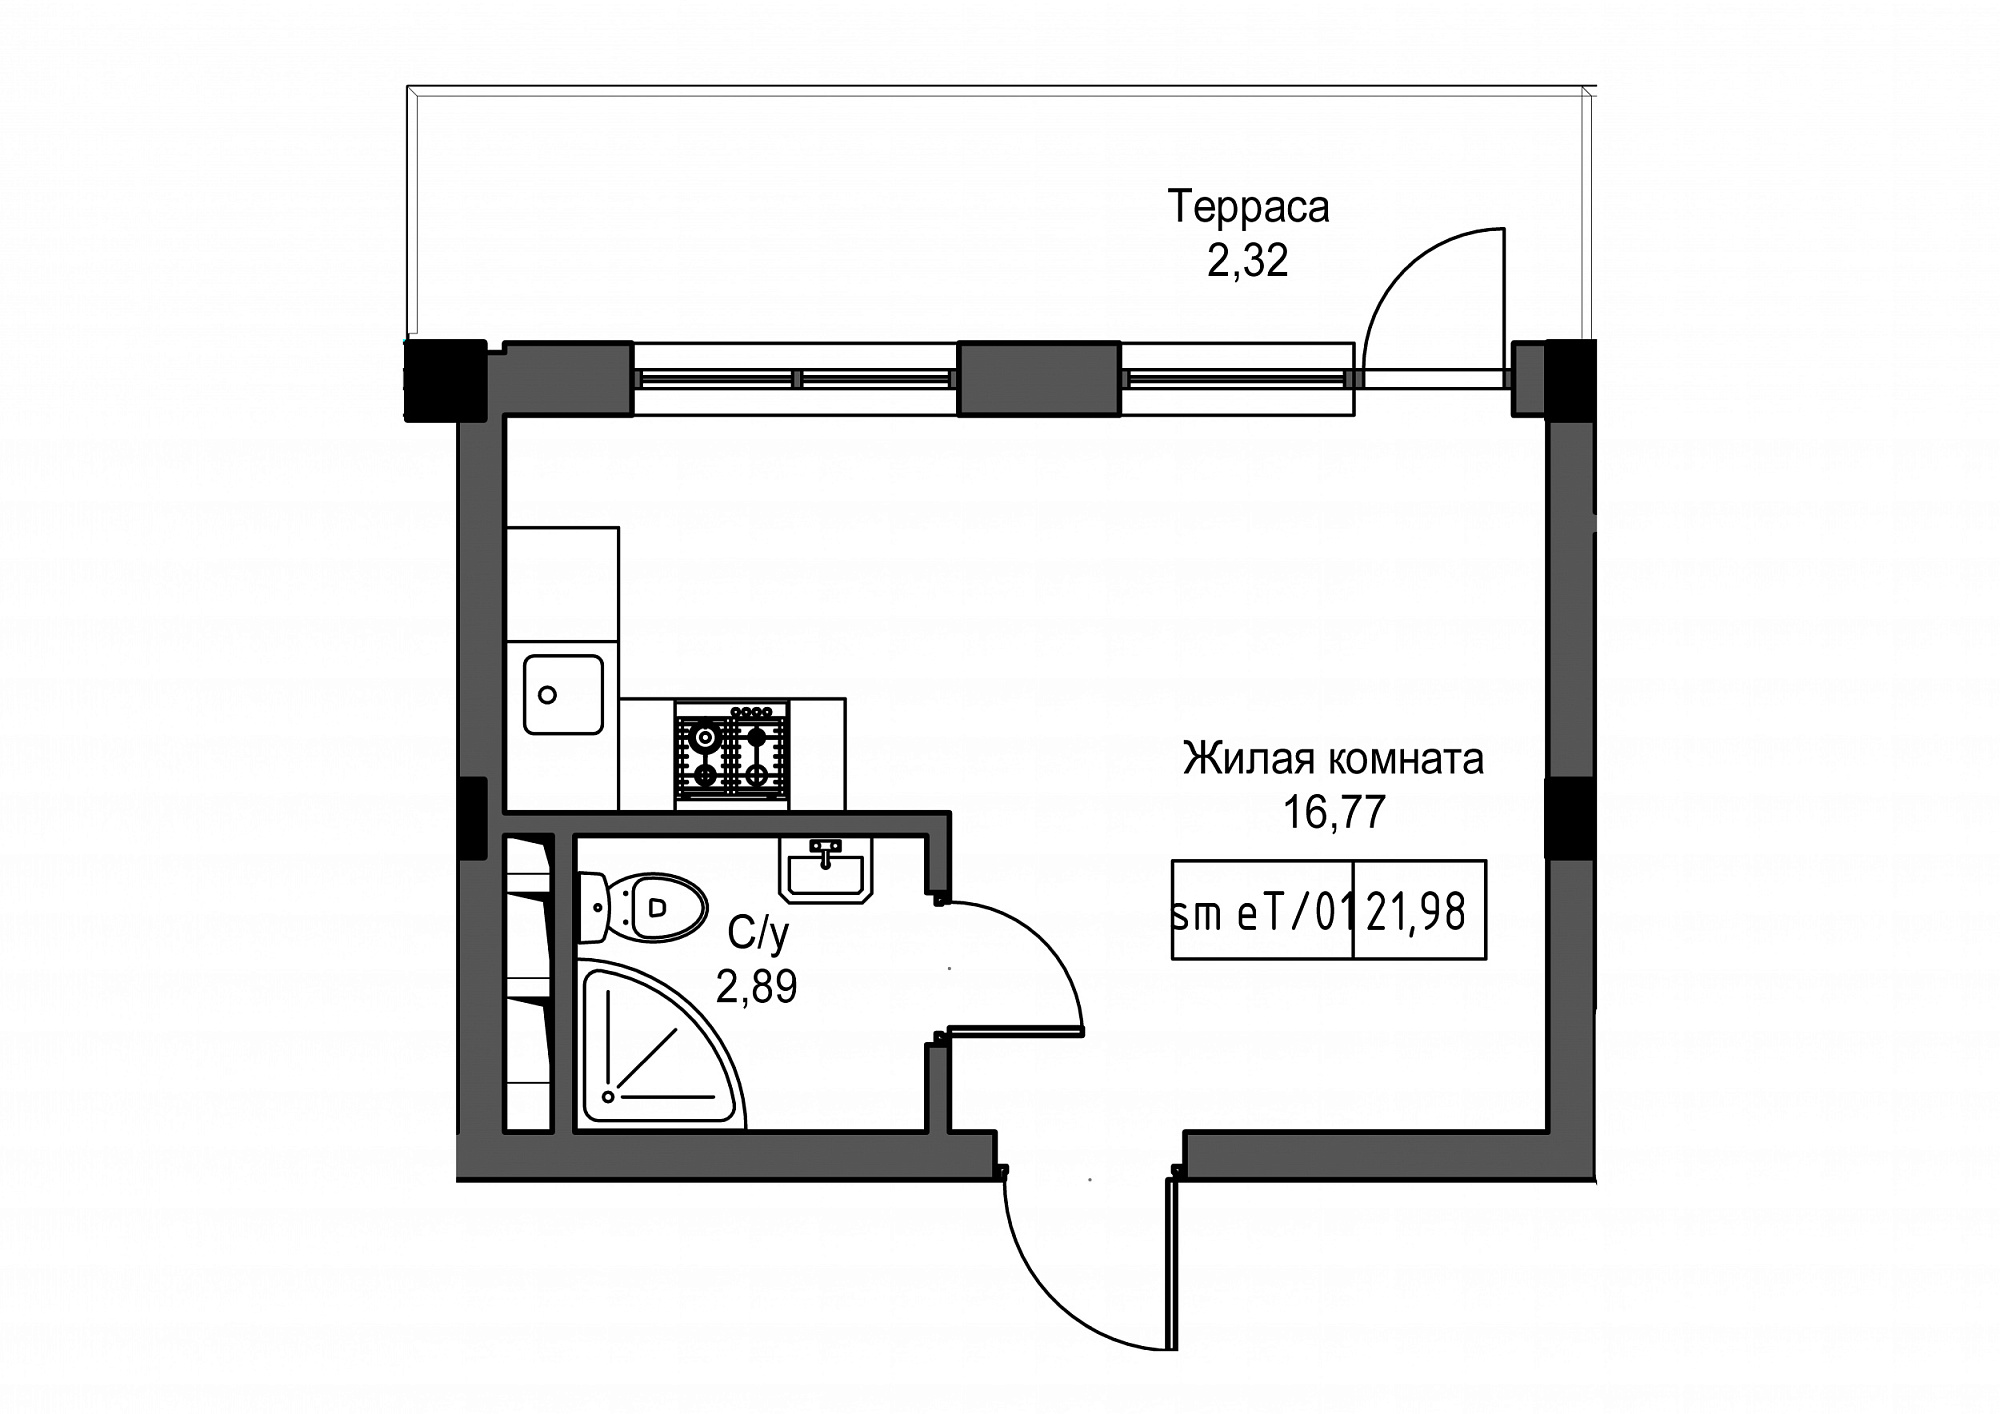 Планування Smart-квартира площею 21.98м2, UM-002-02/0102.